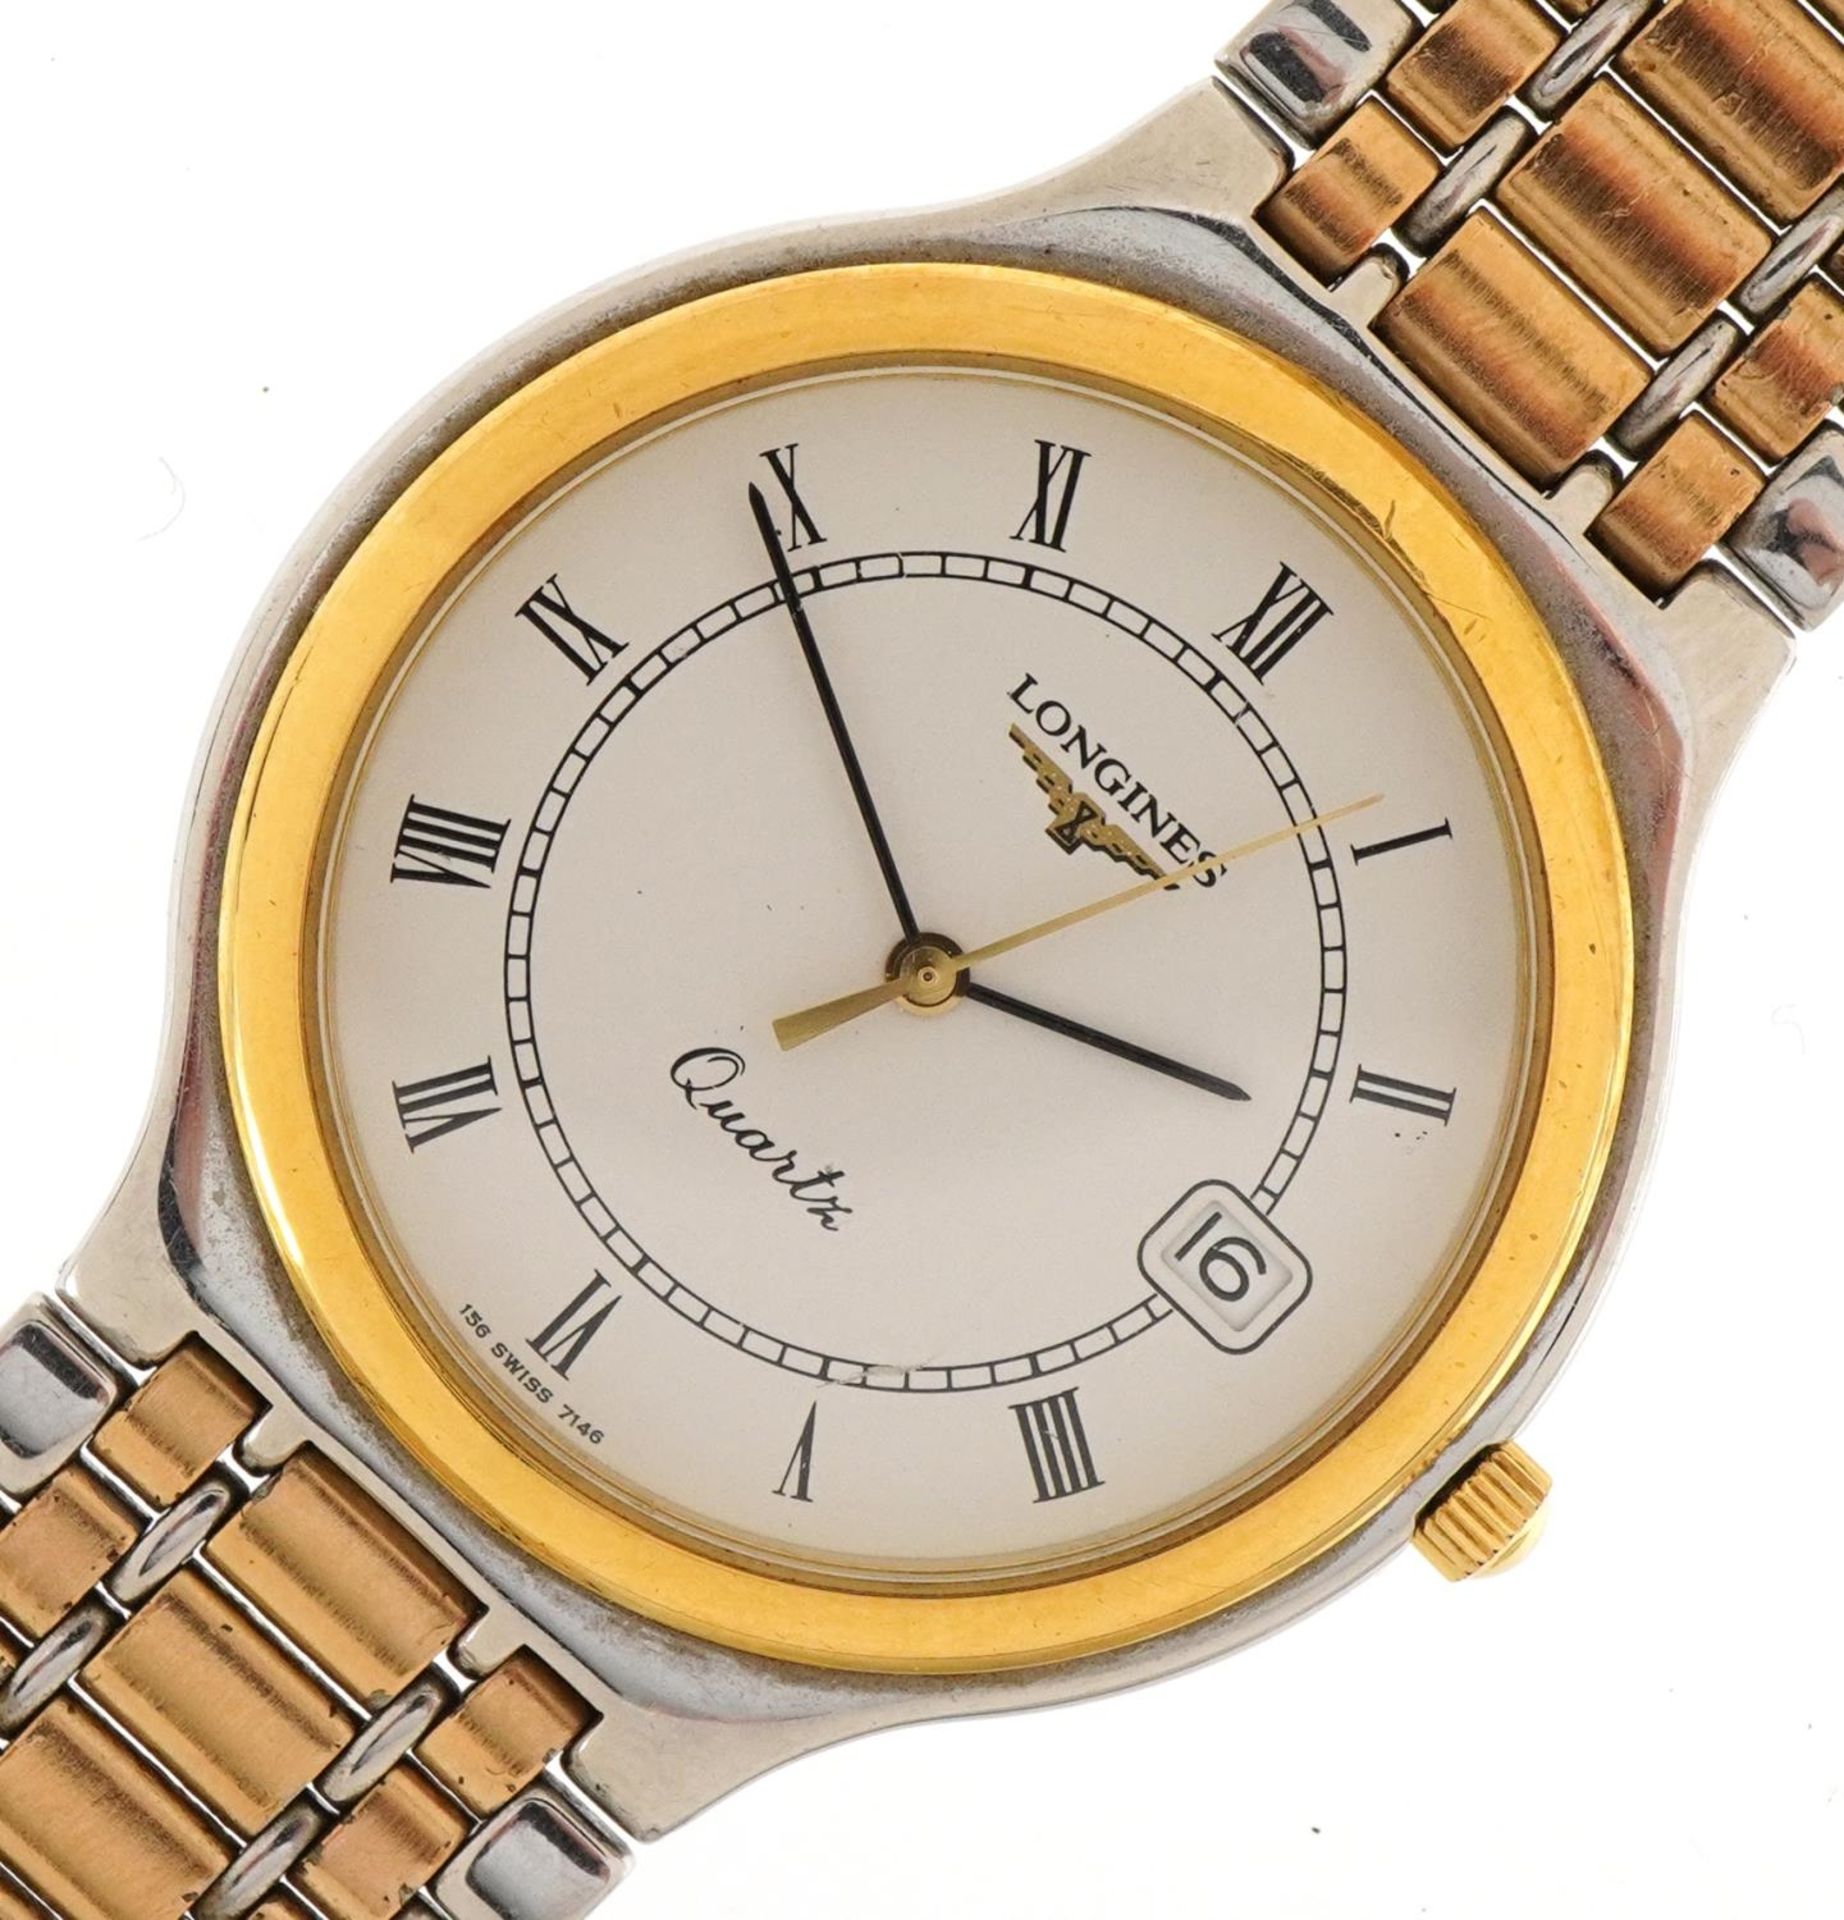 Longines, gentlemen's Longines quartz Flagship wristwatch, the case numbered 24775732 7146, 32mm